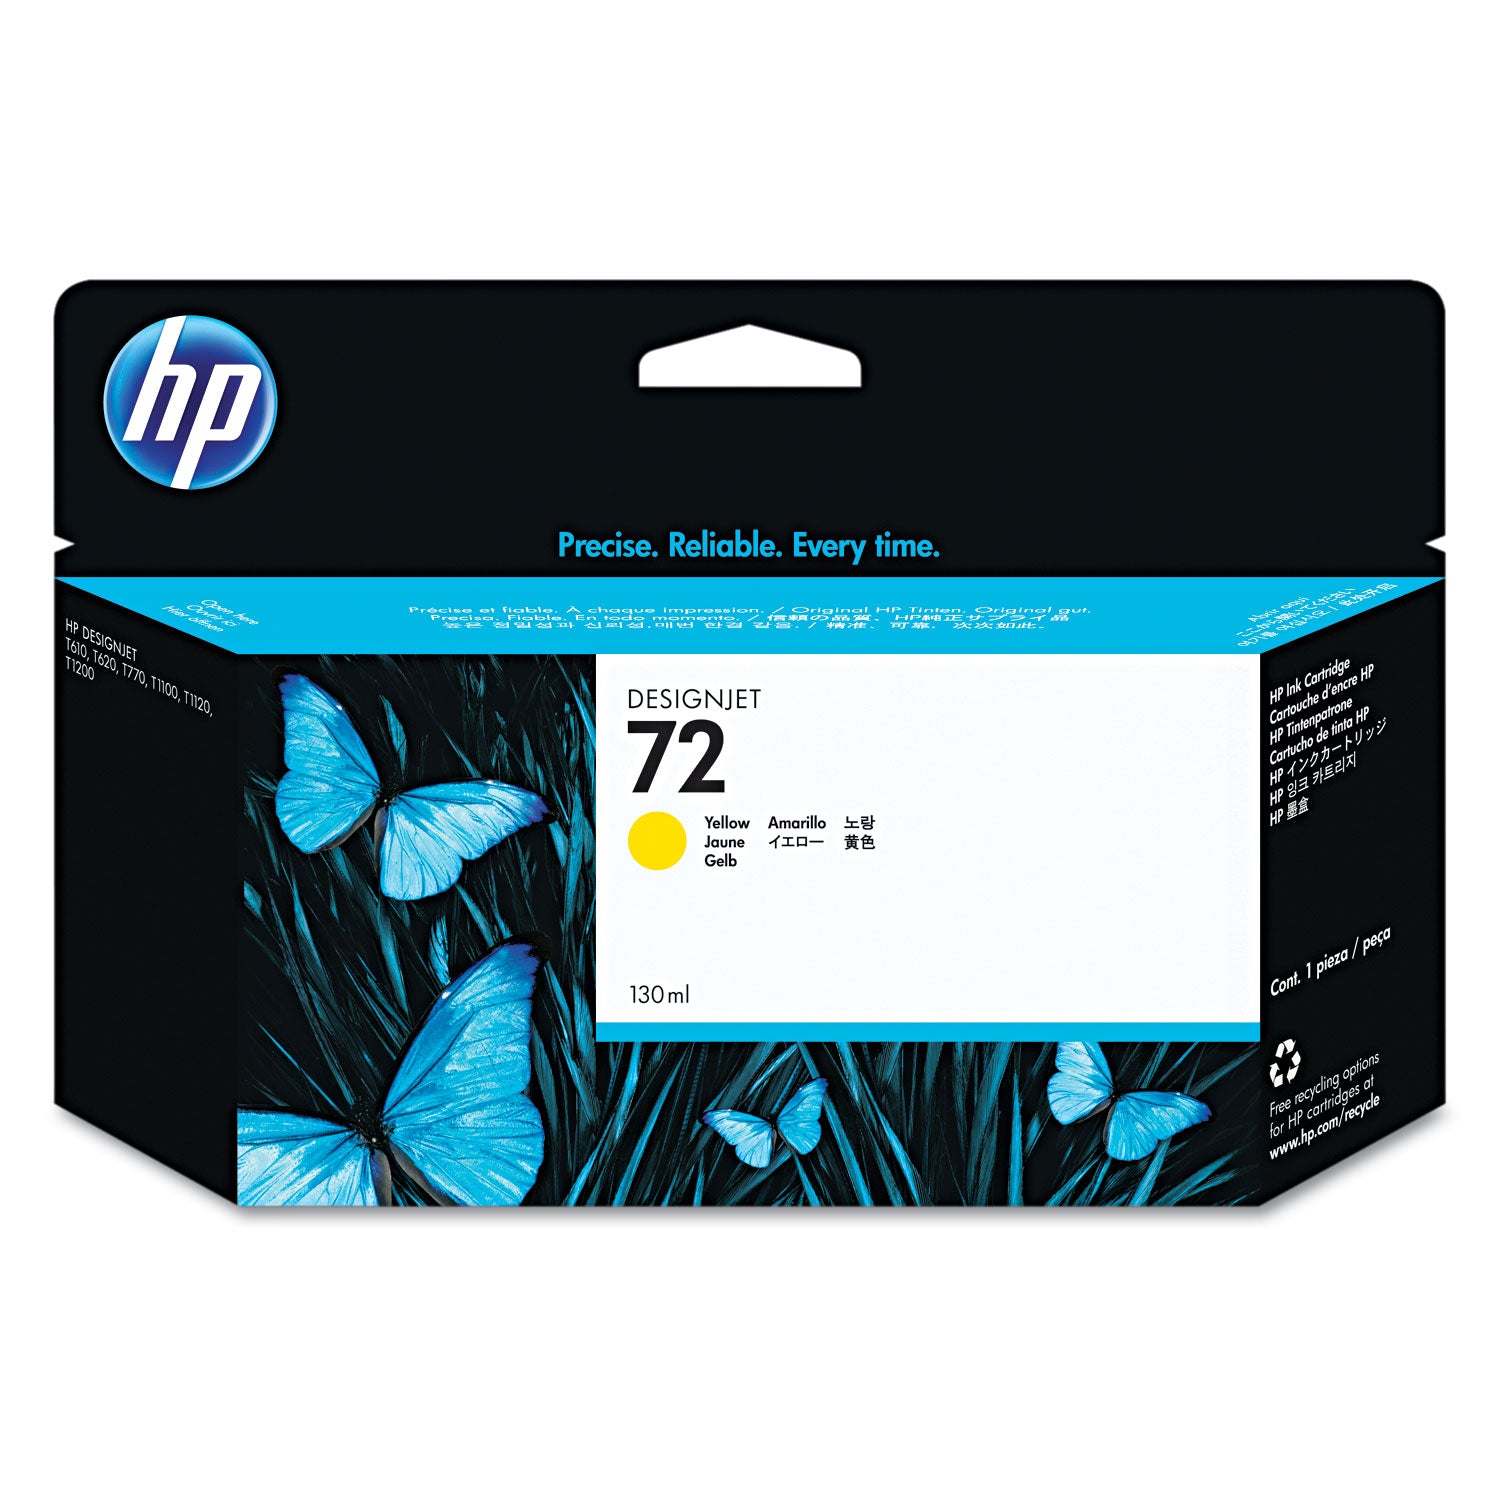 HP 72 Plotter Ink High Capacity 130 ml